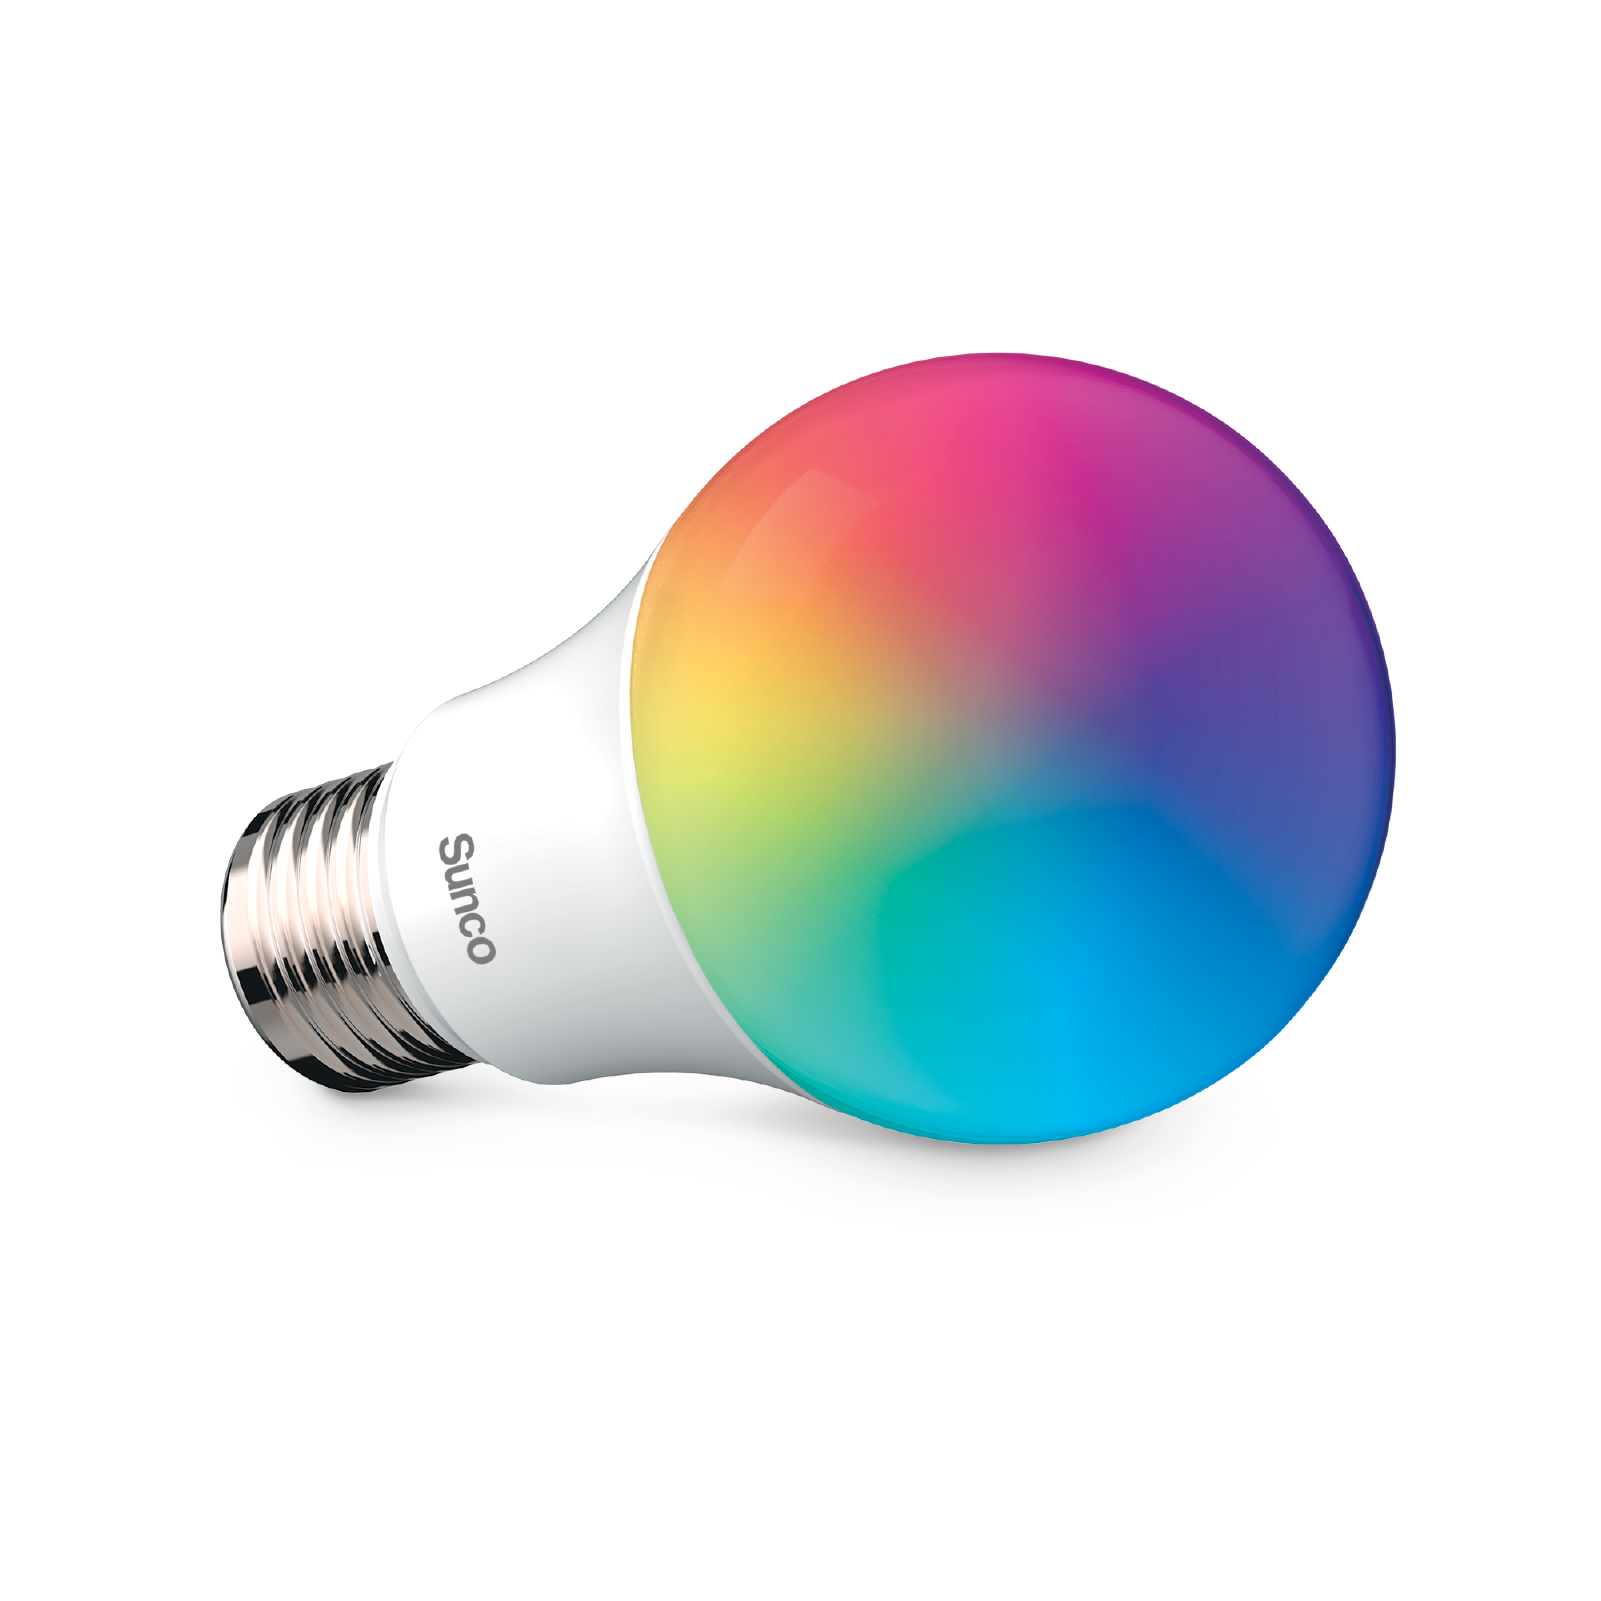 Govee smart multi color LED light bulb, with wifi app control